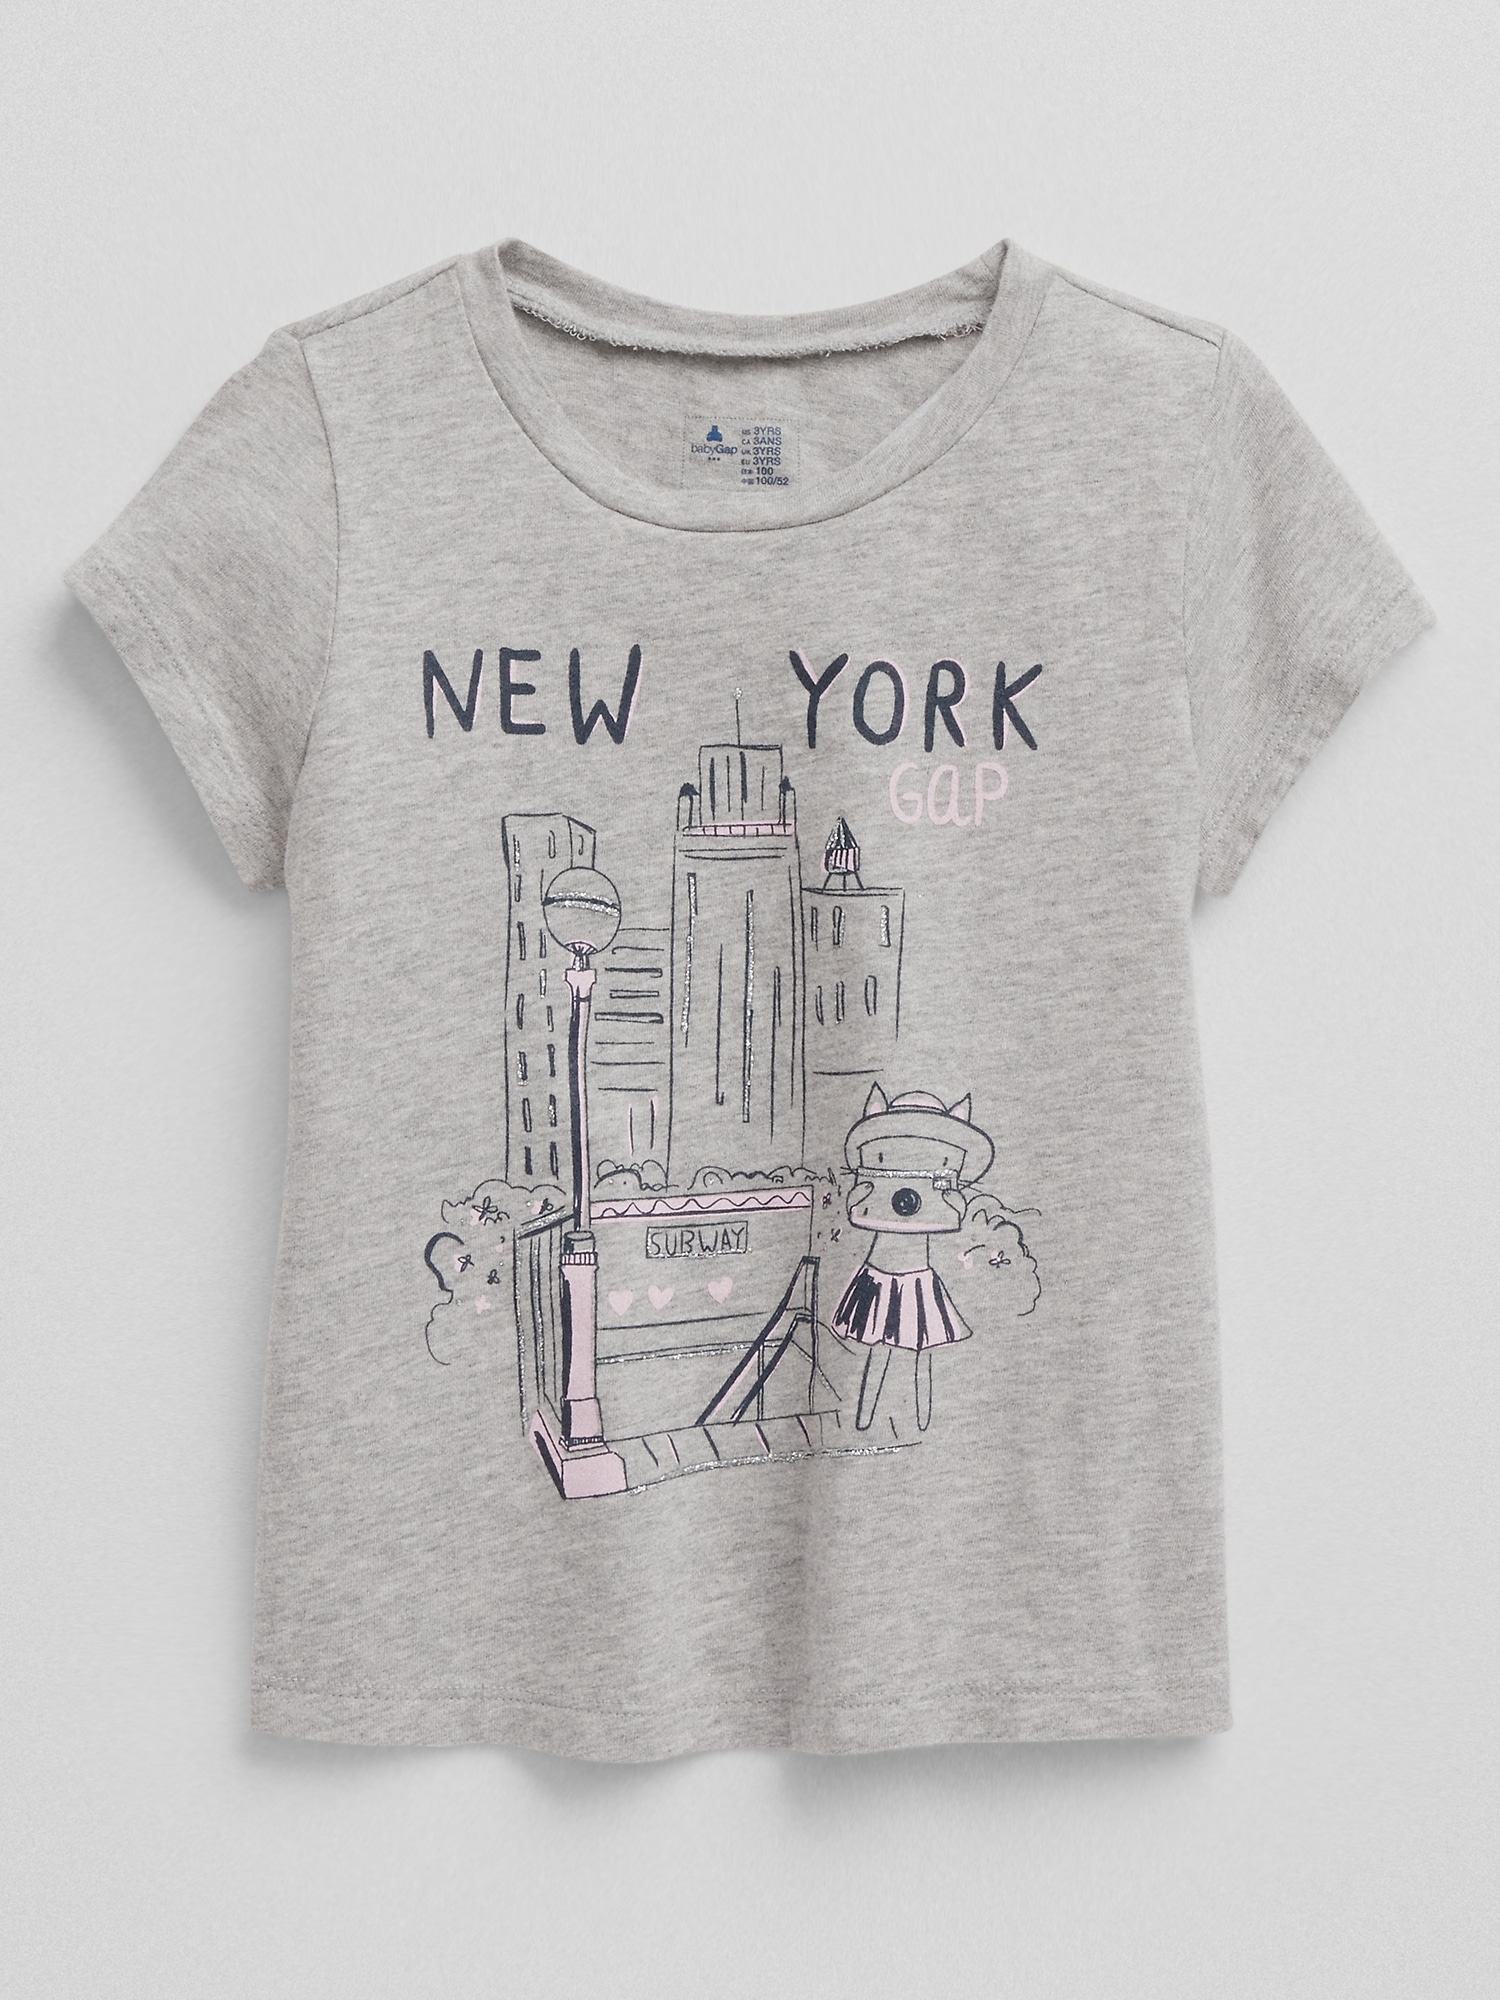 T Shirt New York Subway Rldm - police shirt roblox code rldm